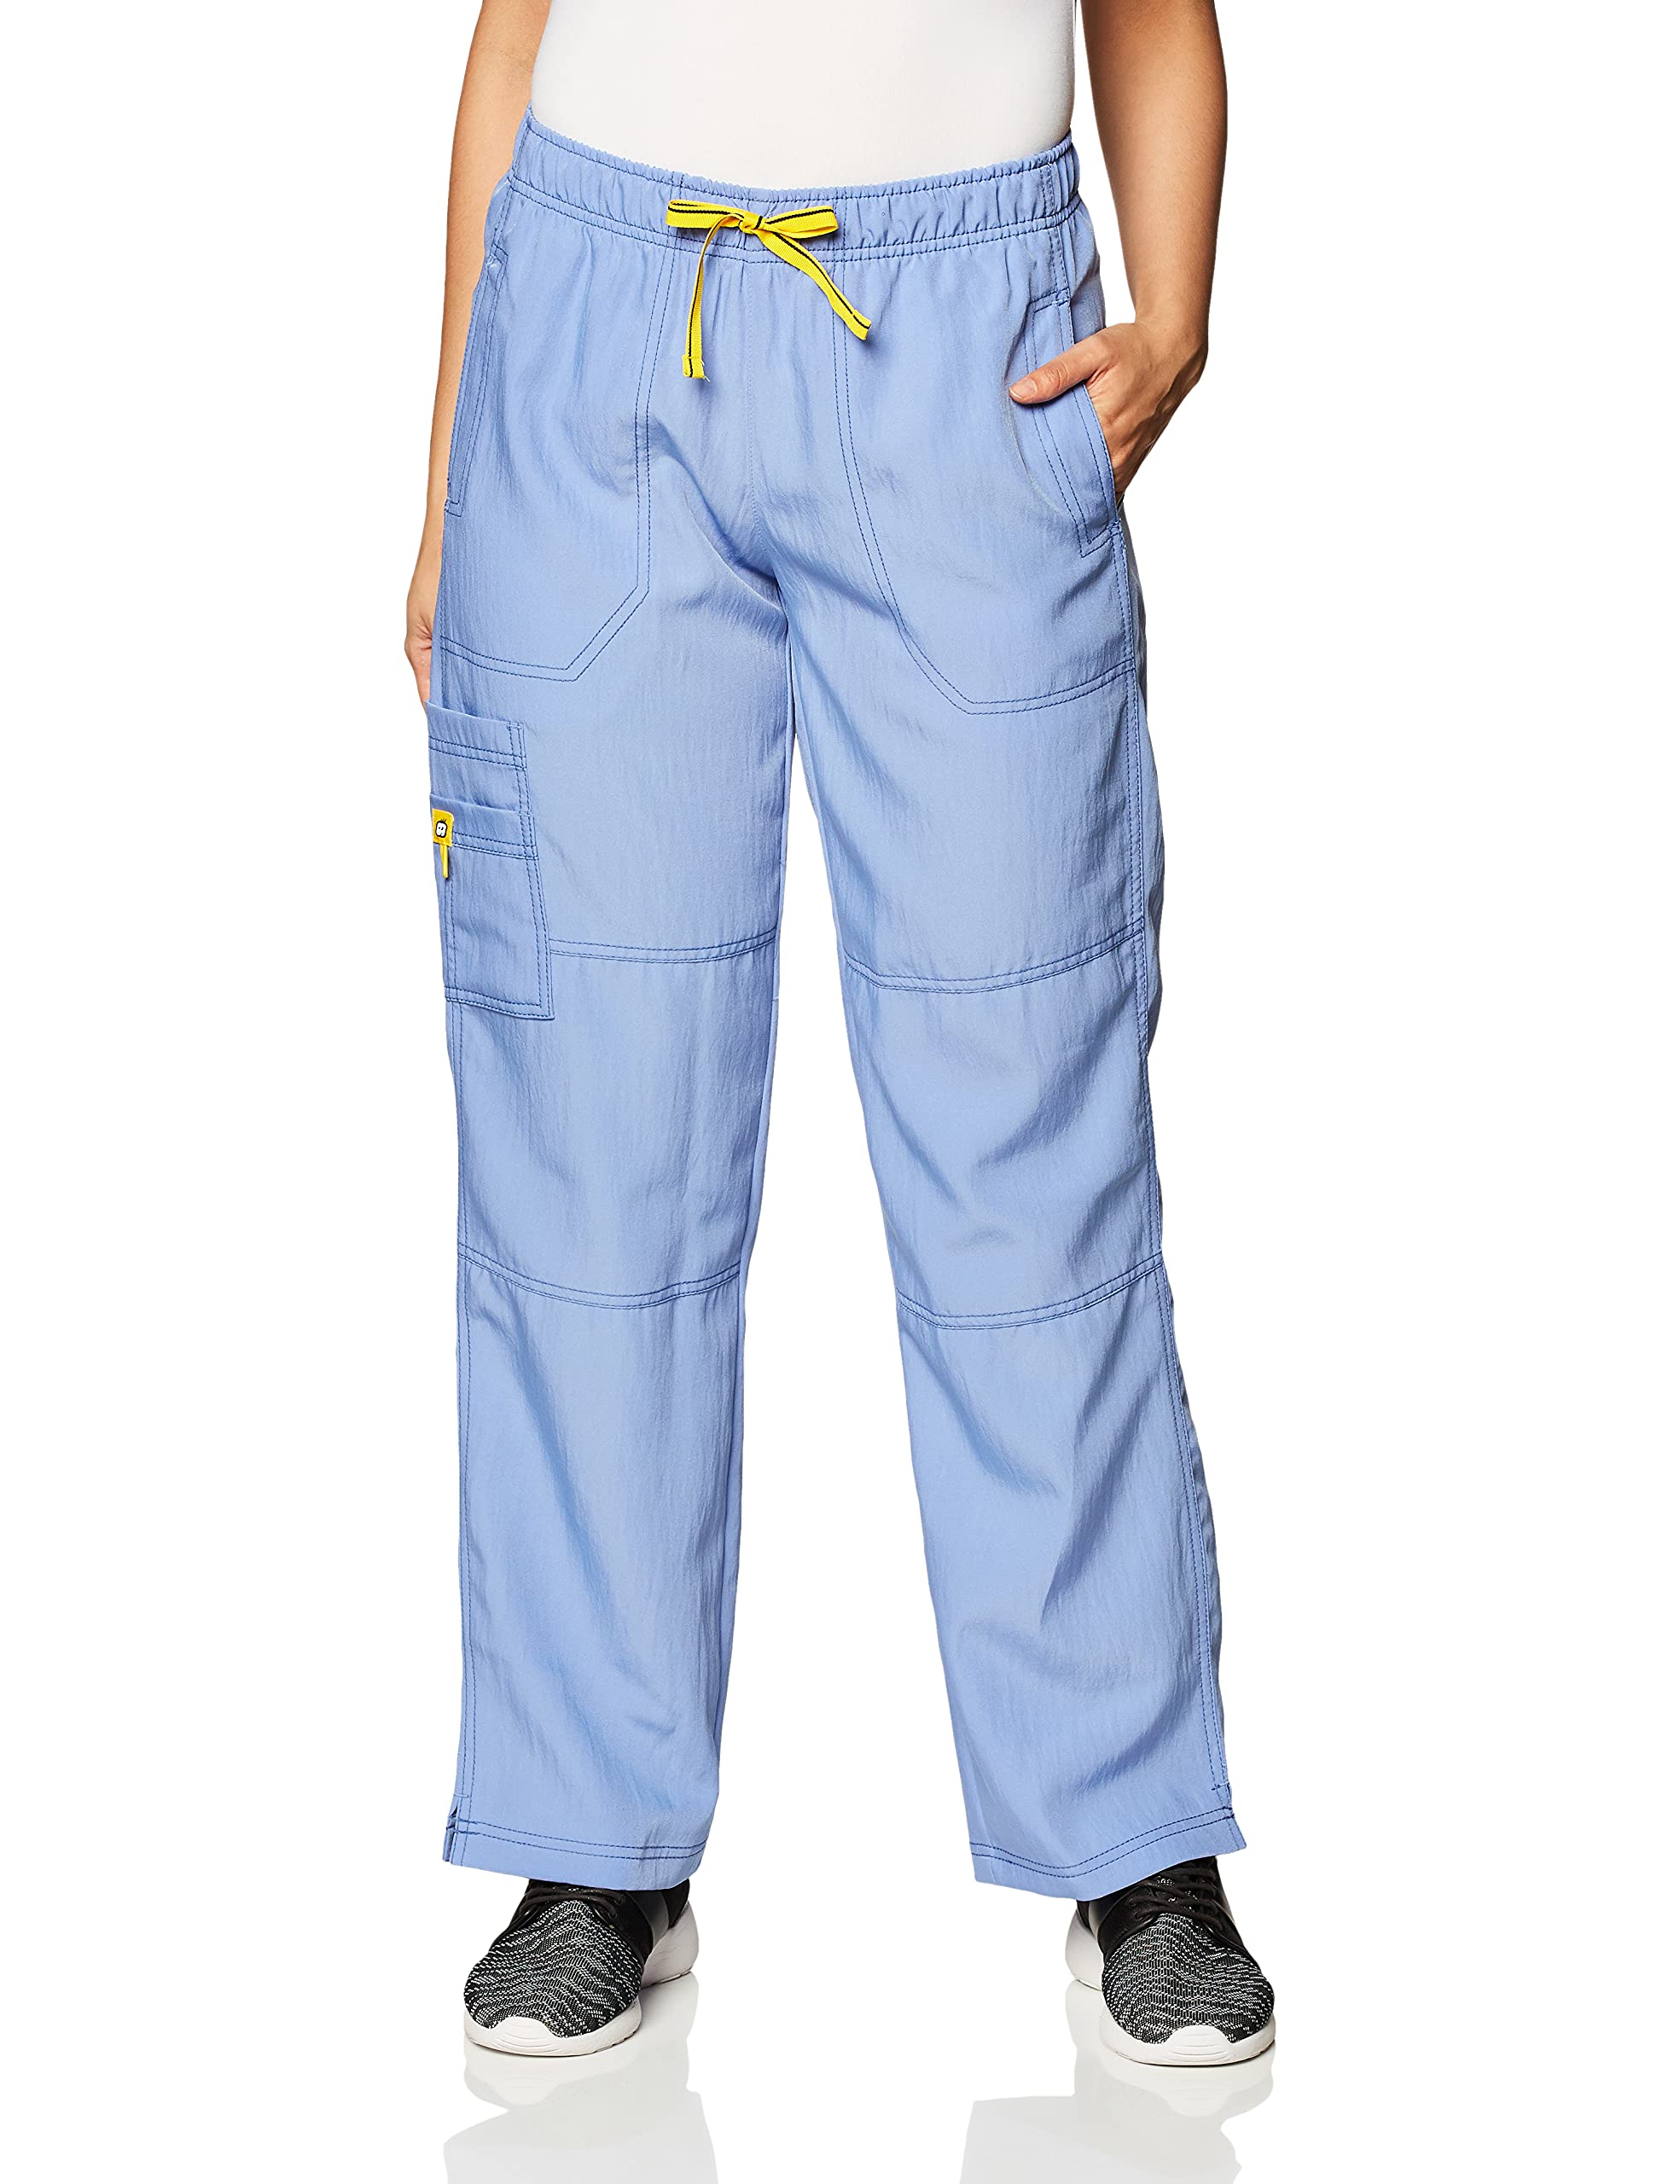 Wonderwink Womens Four Stretch Womens Cargo Medical Scrubs Pants, Ceil Blue, Xx-Large Us